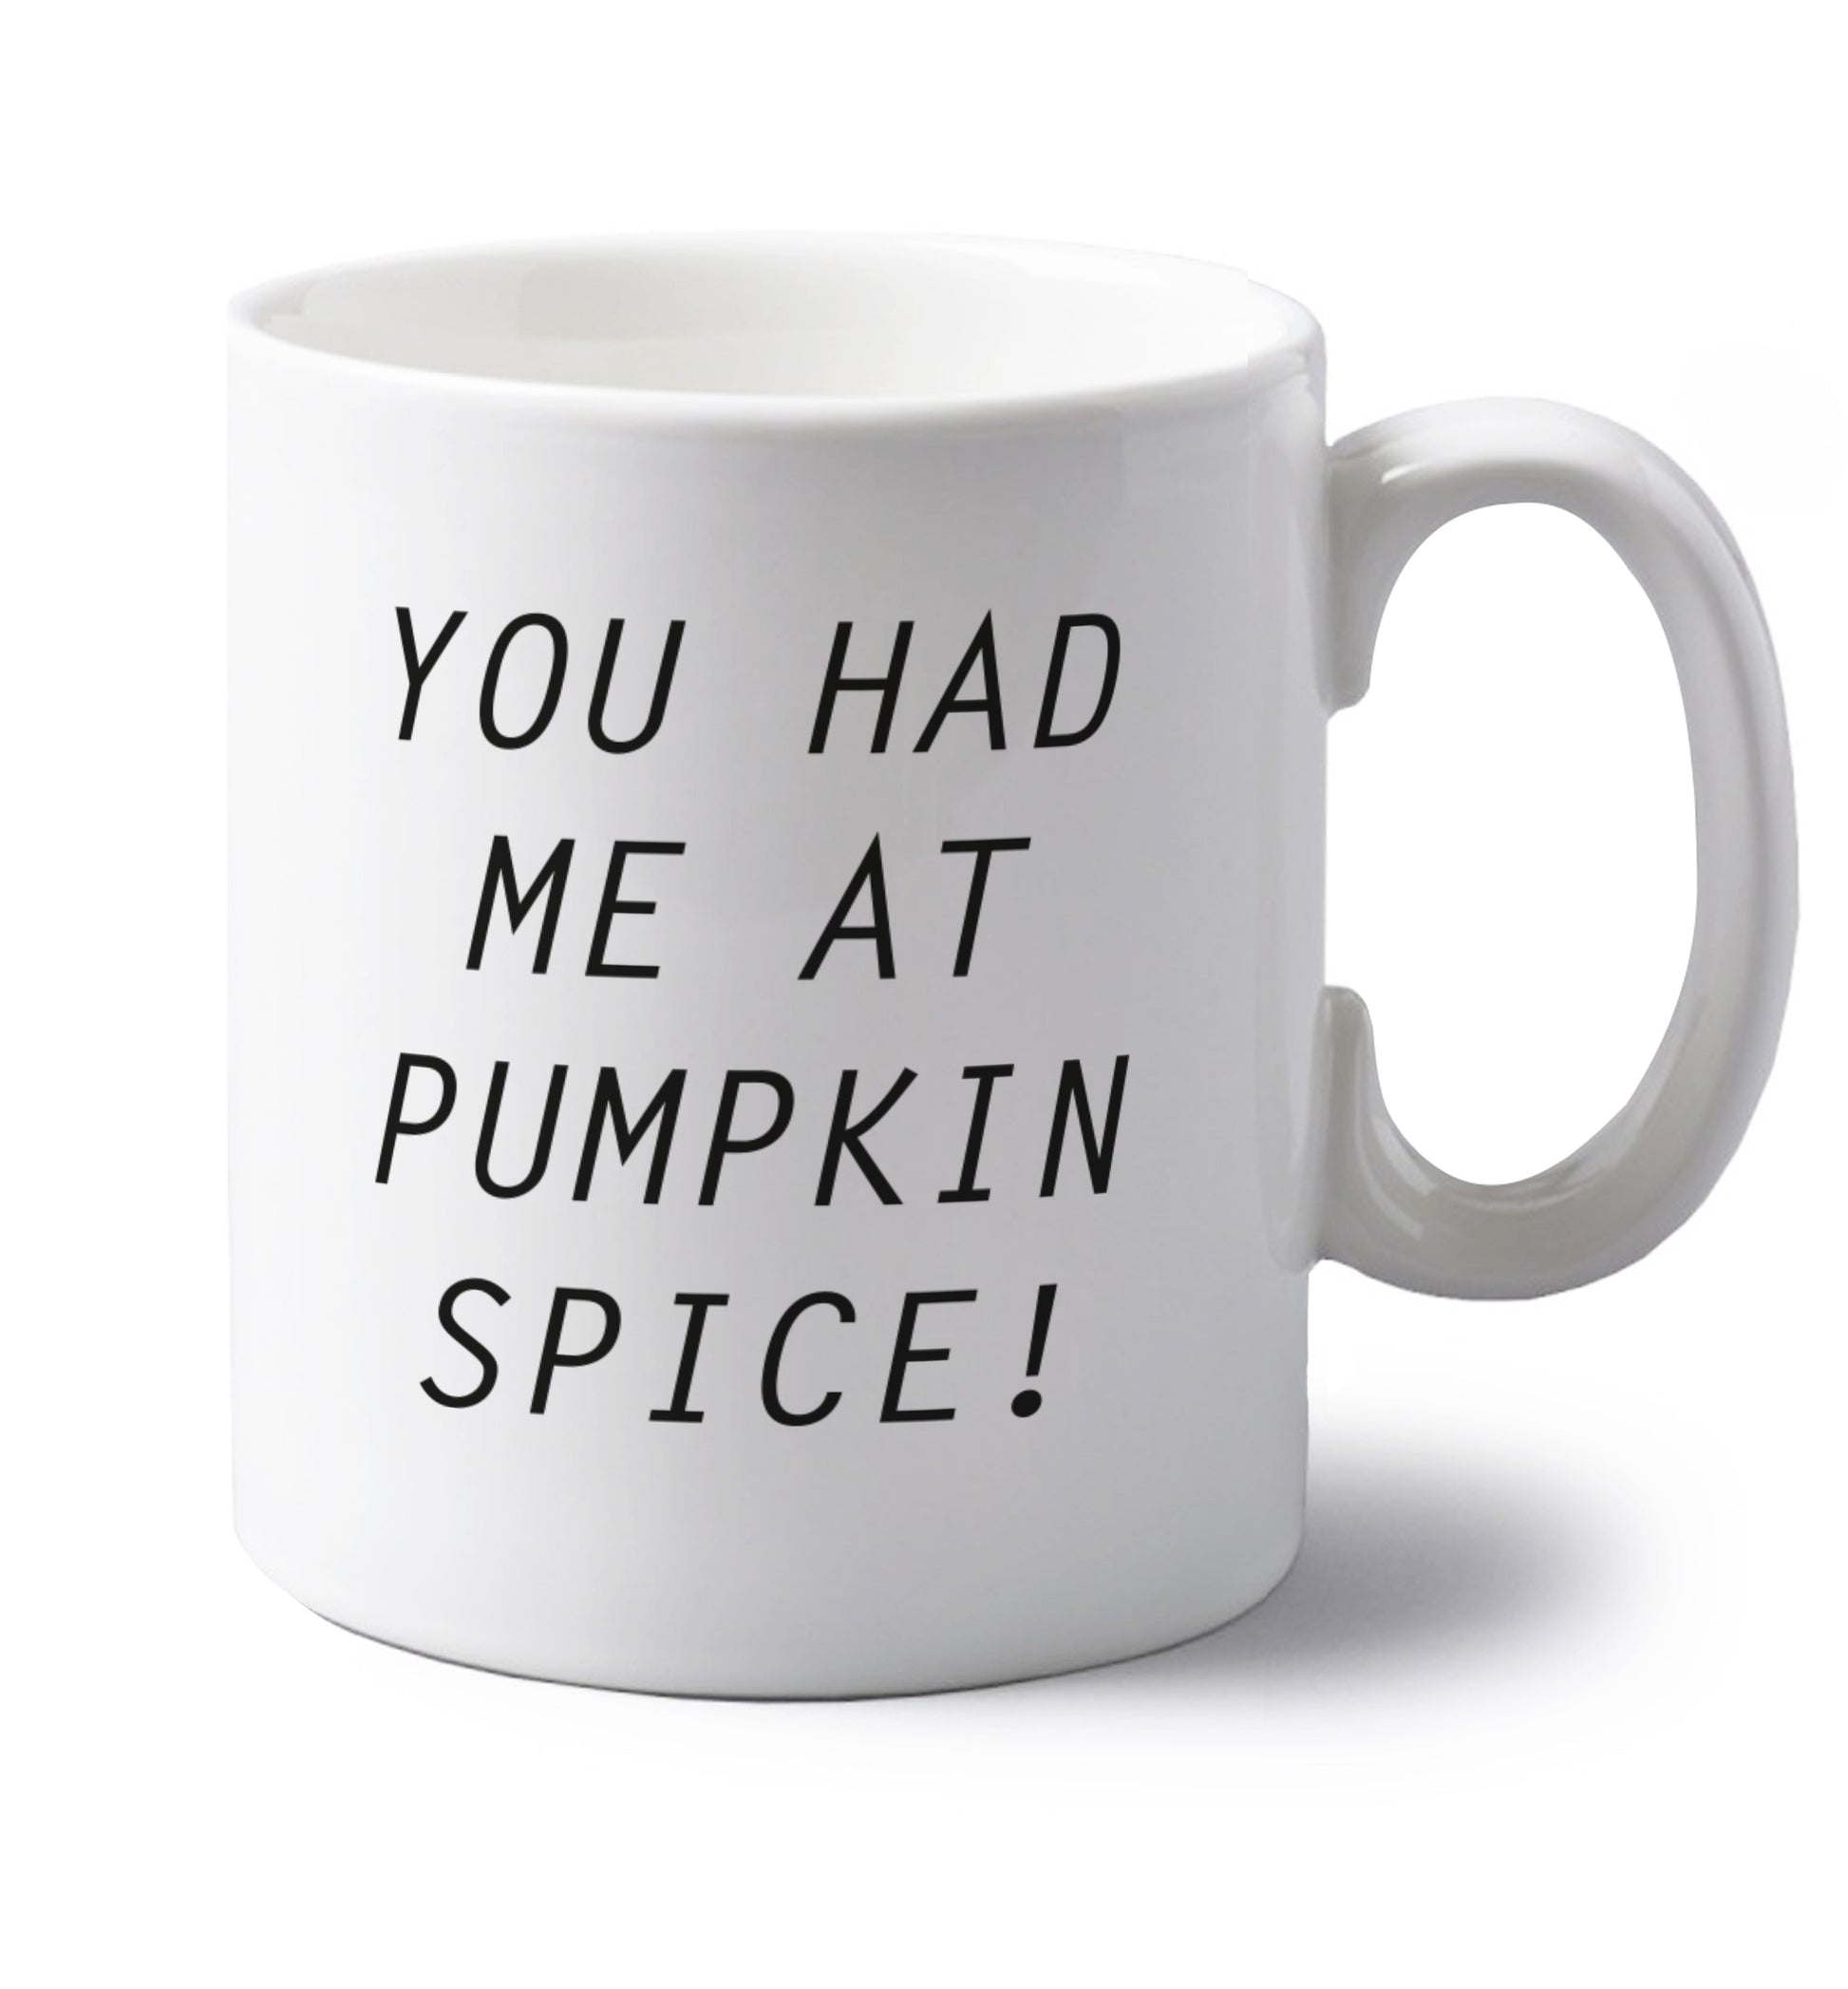 You had me at pumpkin spice left handed white ceramic mug 